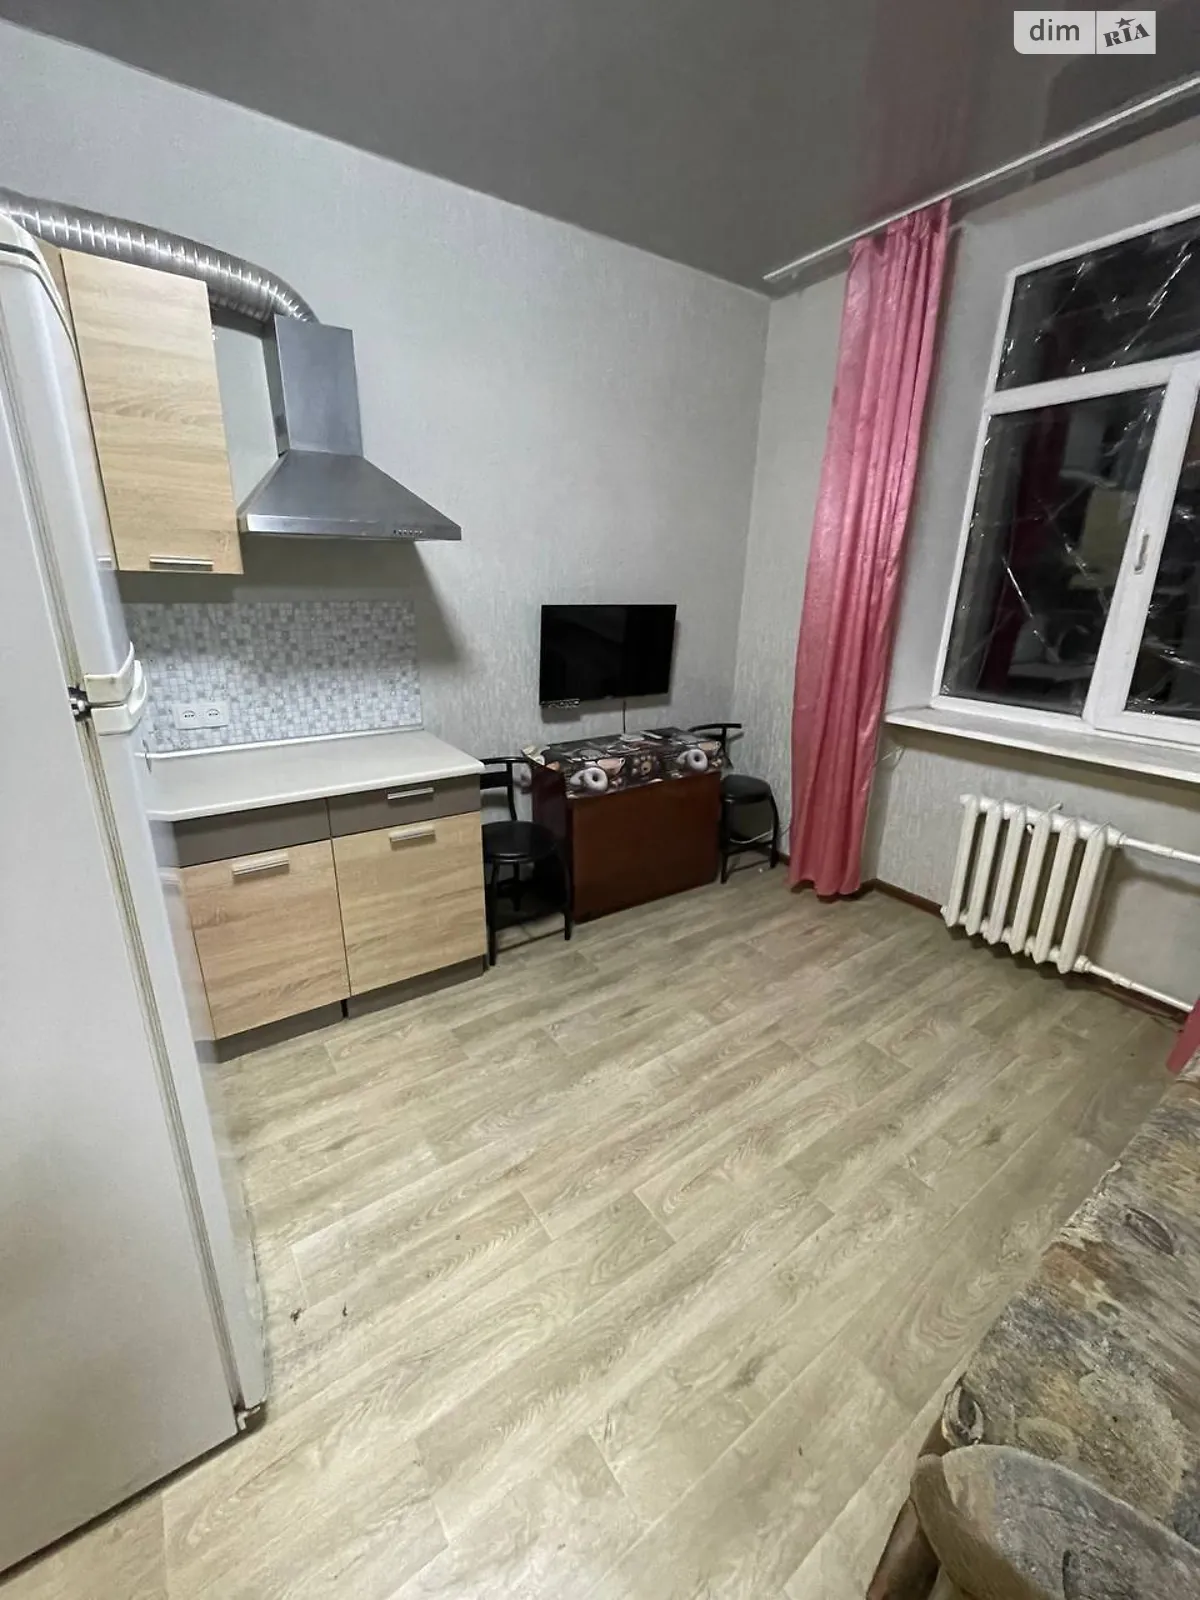 Продается комната 17.5 кв. м в Харькове - фото 2